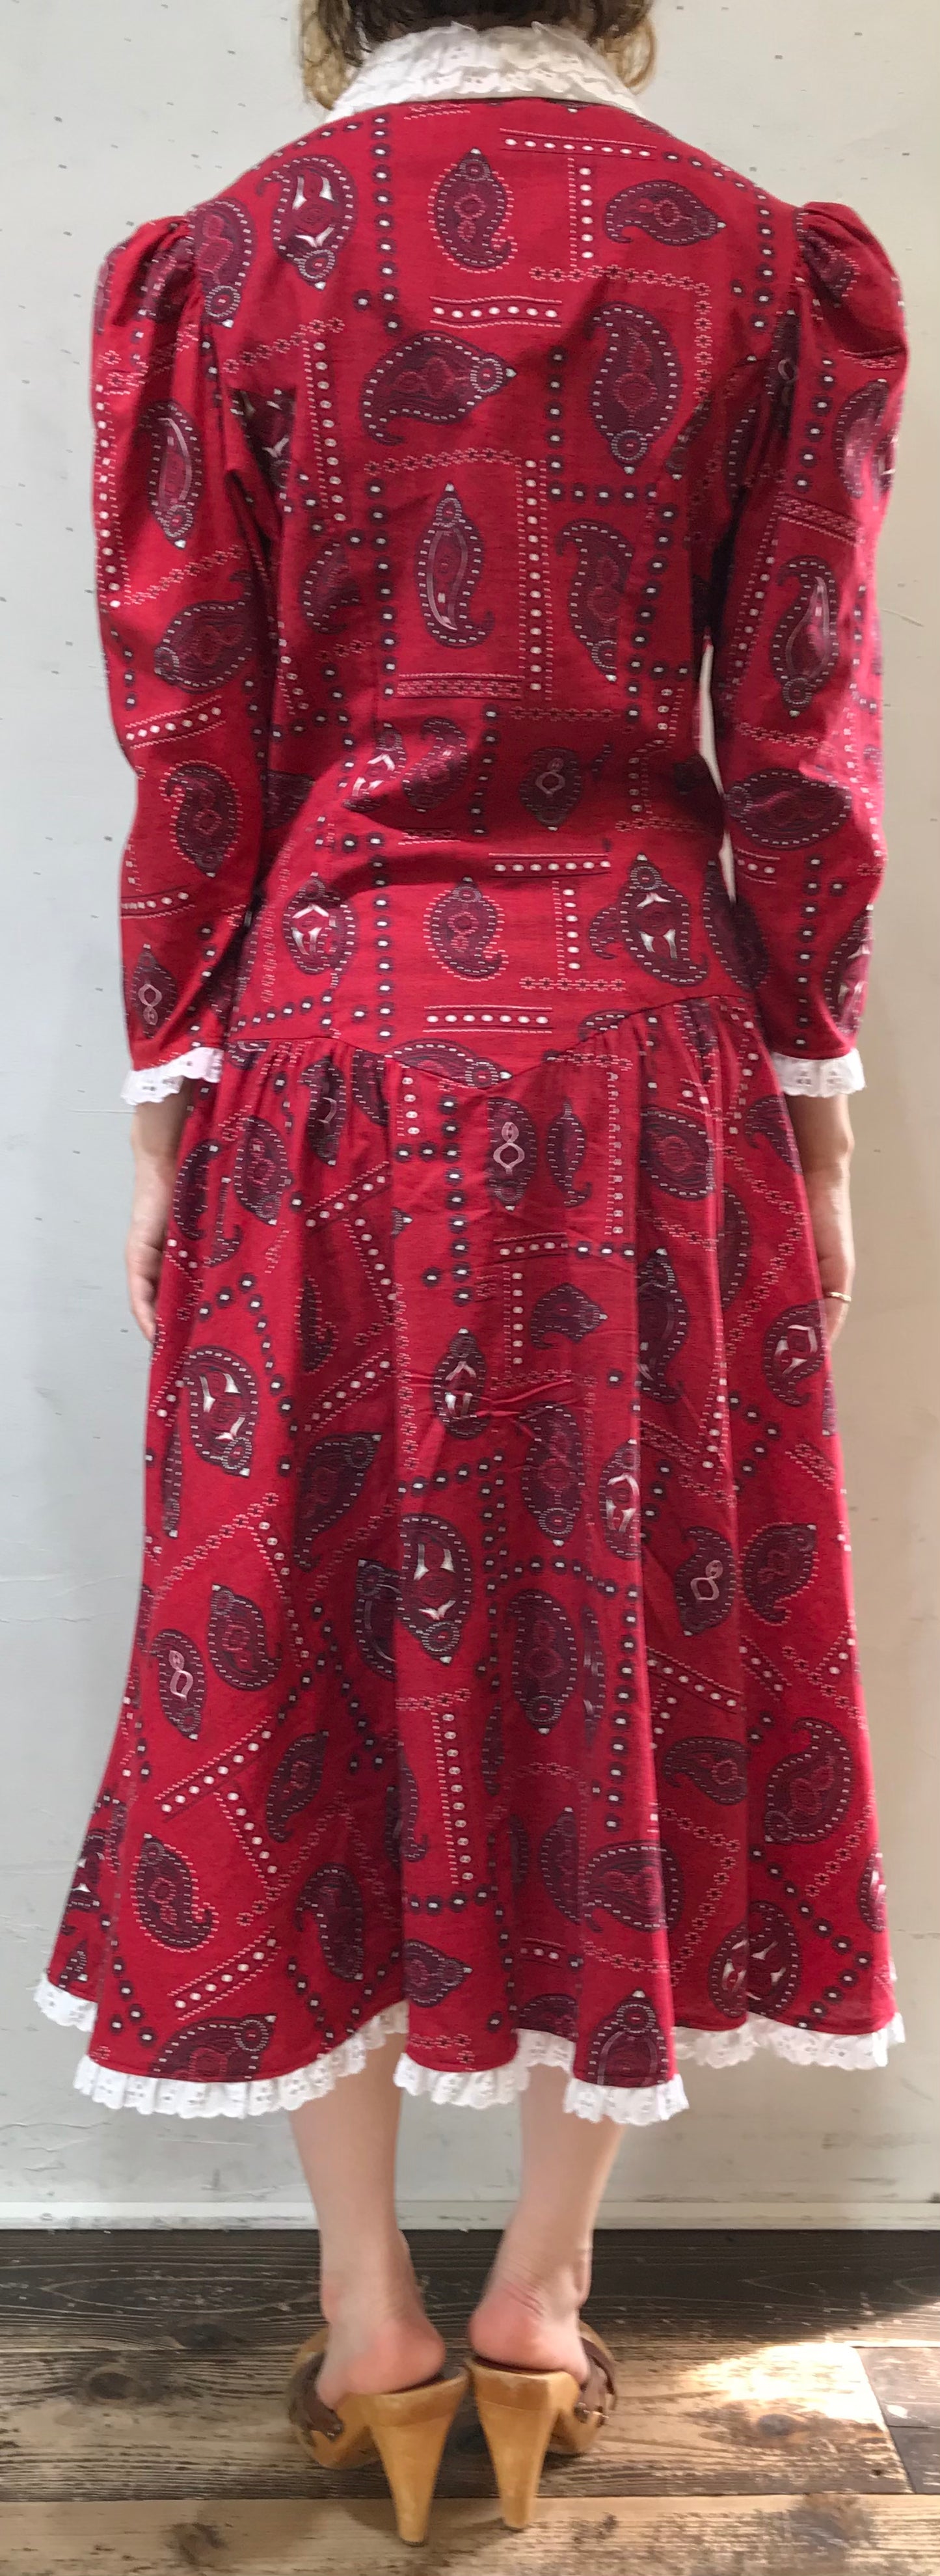 Vintage Paisley Dress "go vicki!" [A19272]